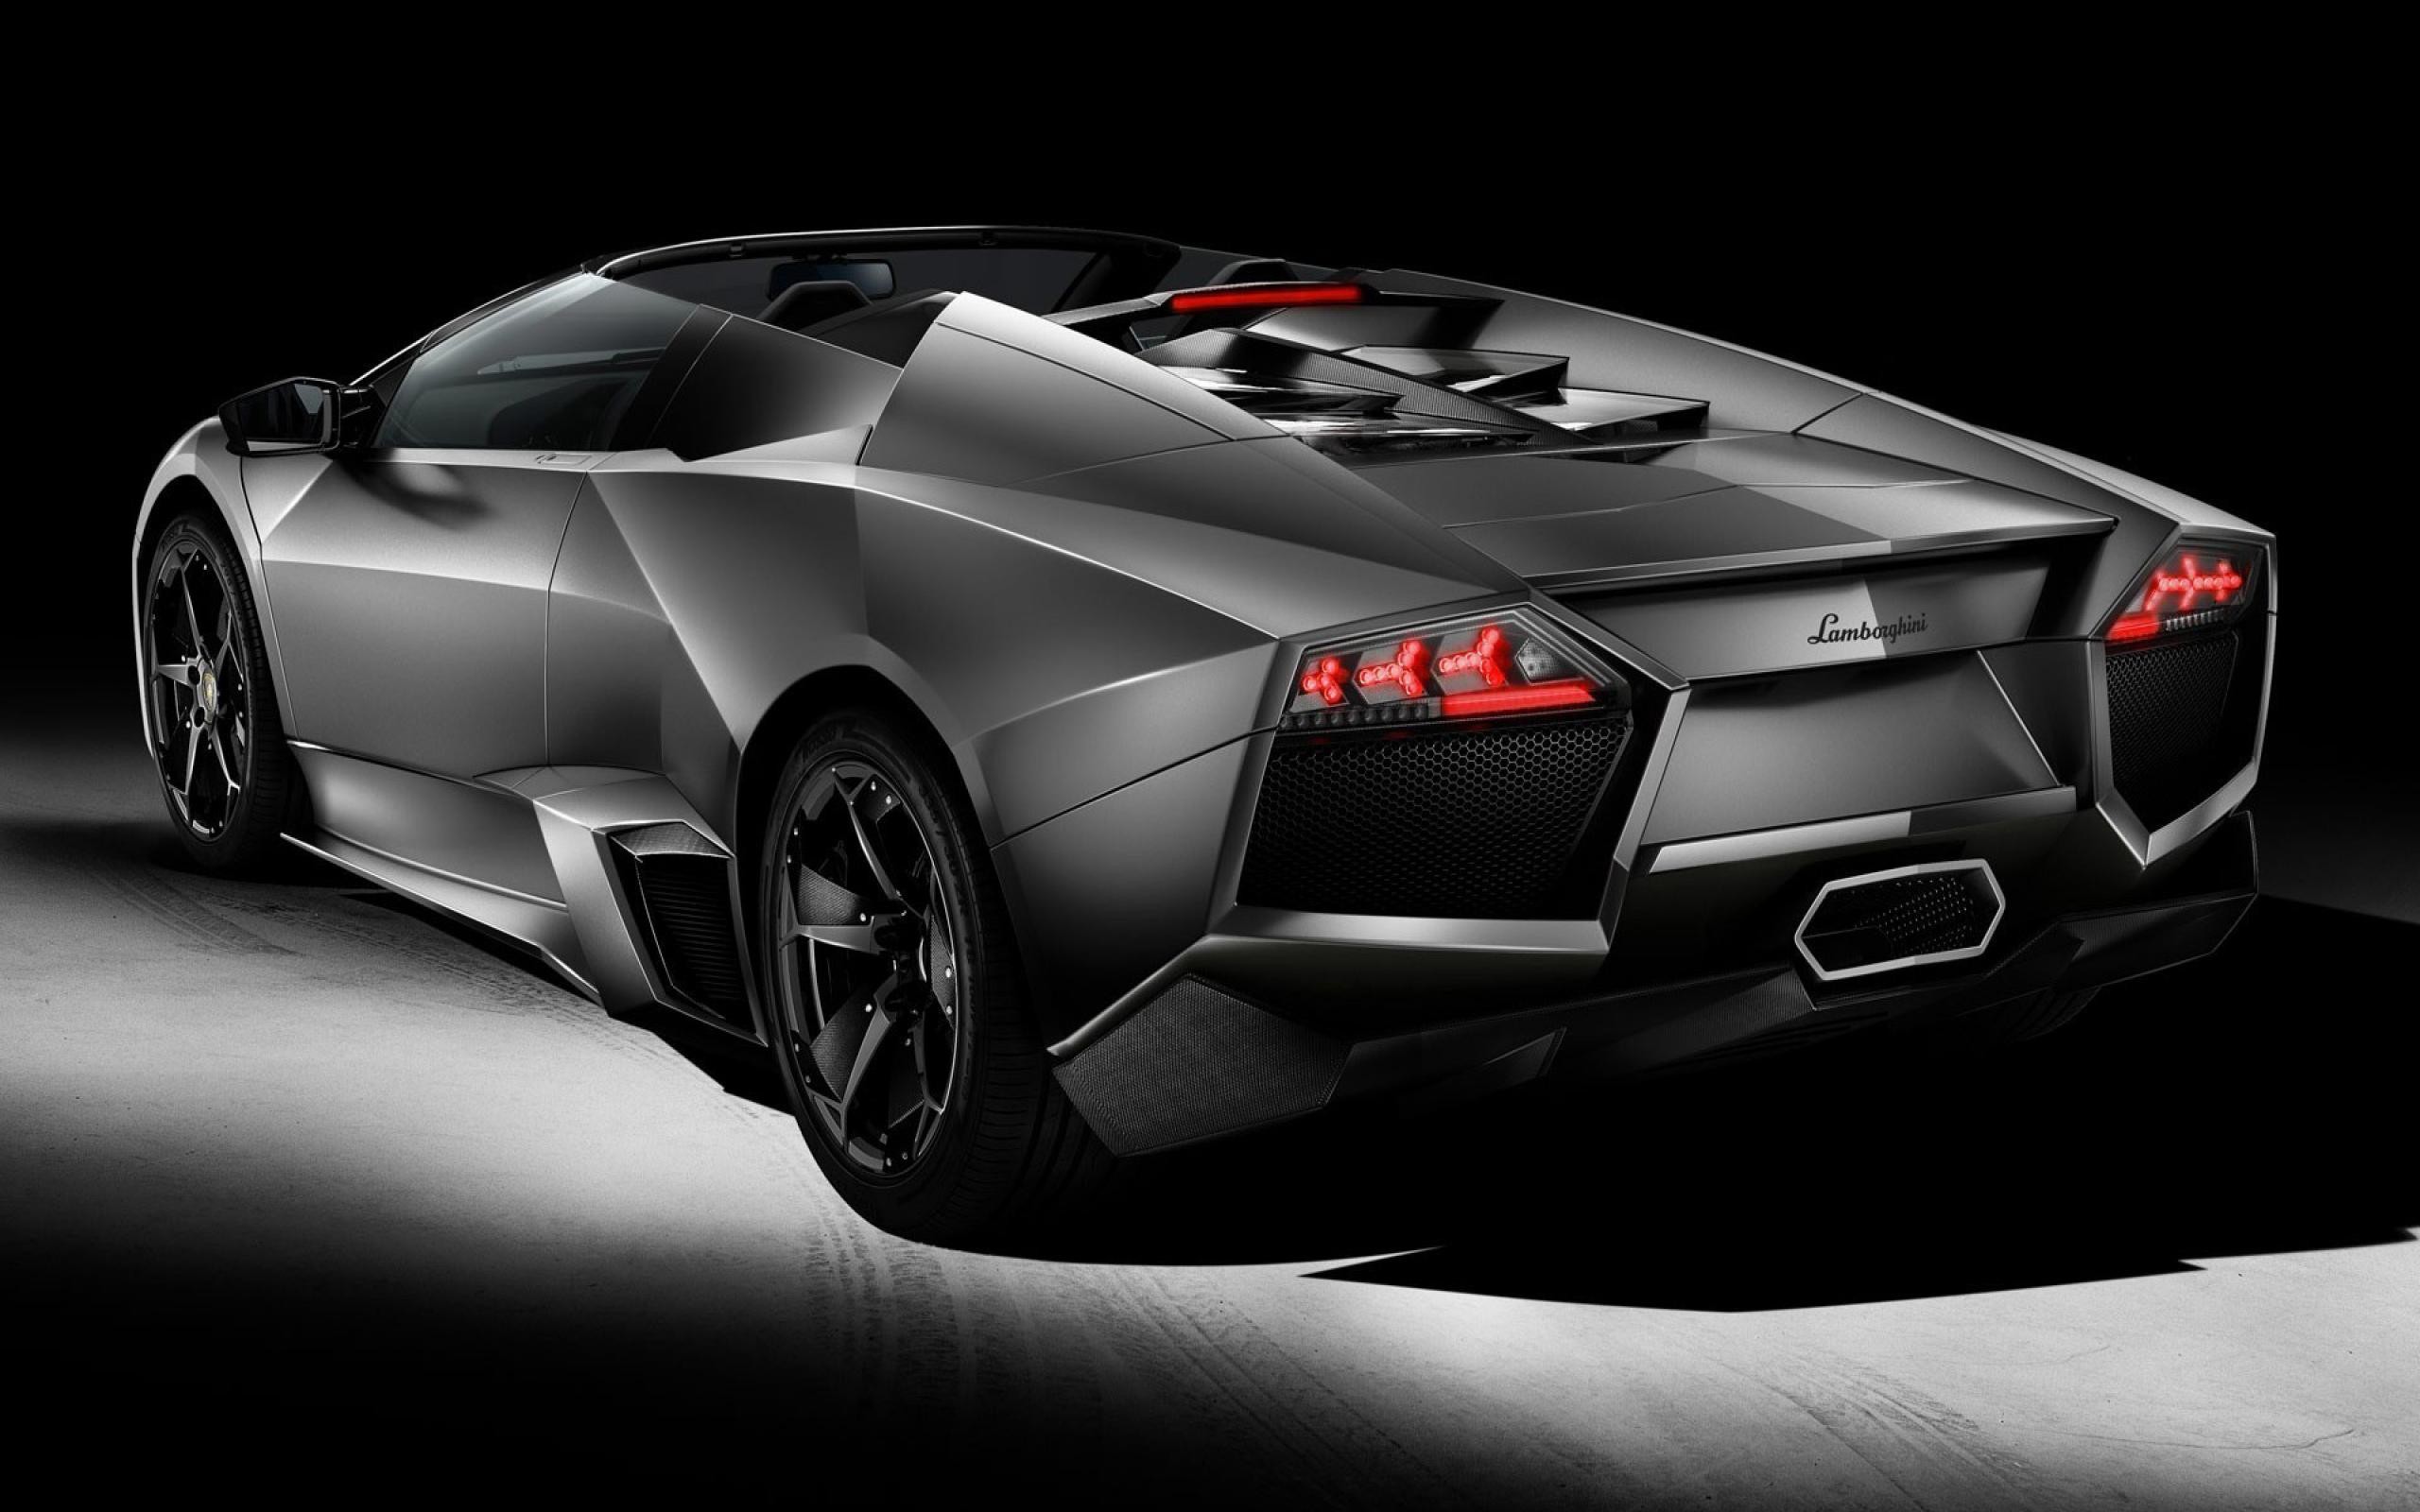 2560x1600 Lamborghini Reventon Wallpapers - Full HD wallpaper search